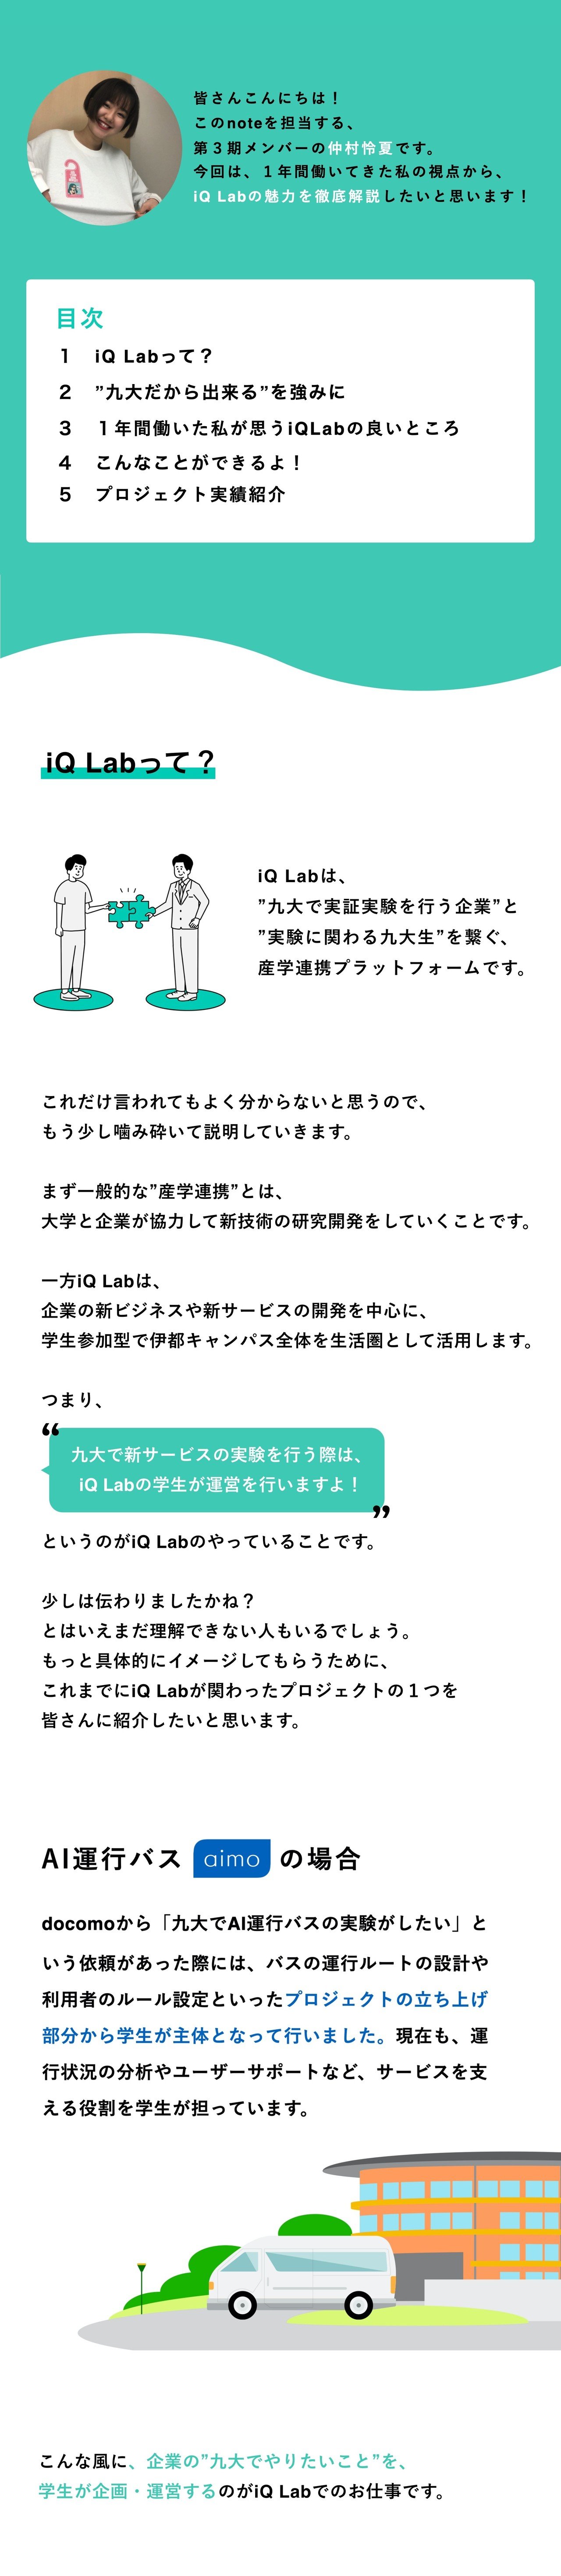 iq_lab紹介note___12